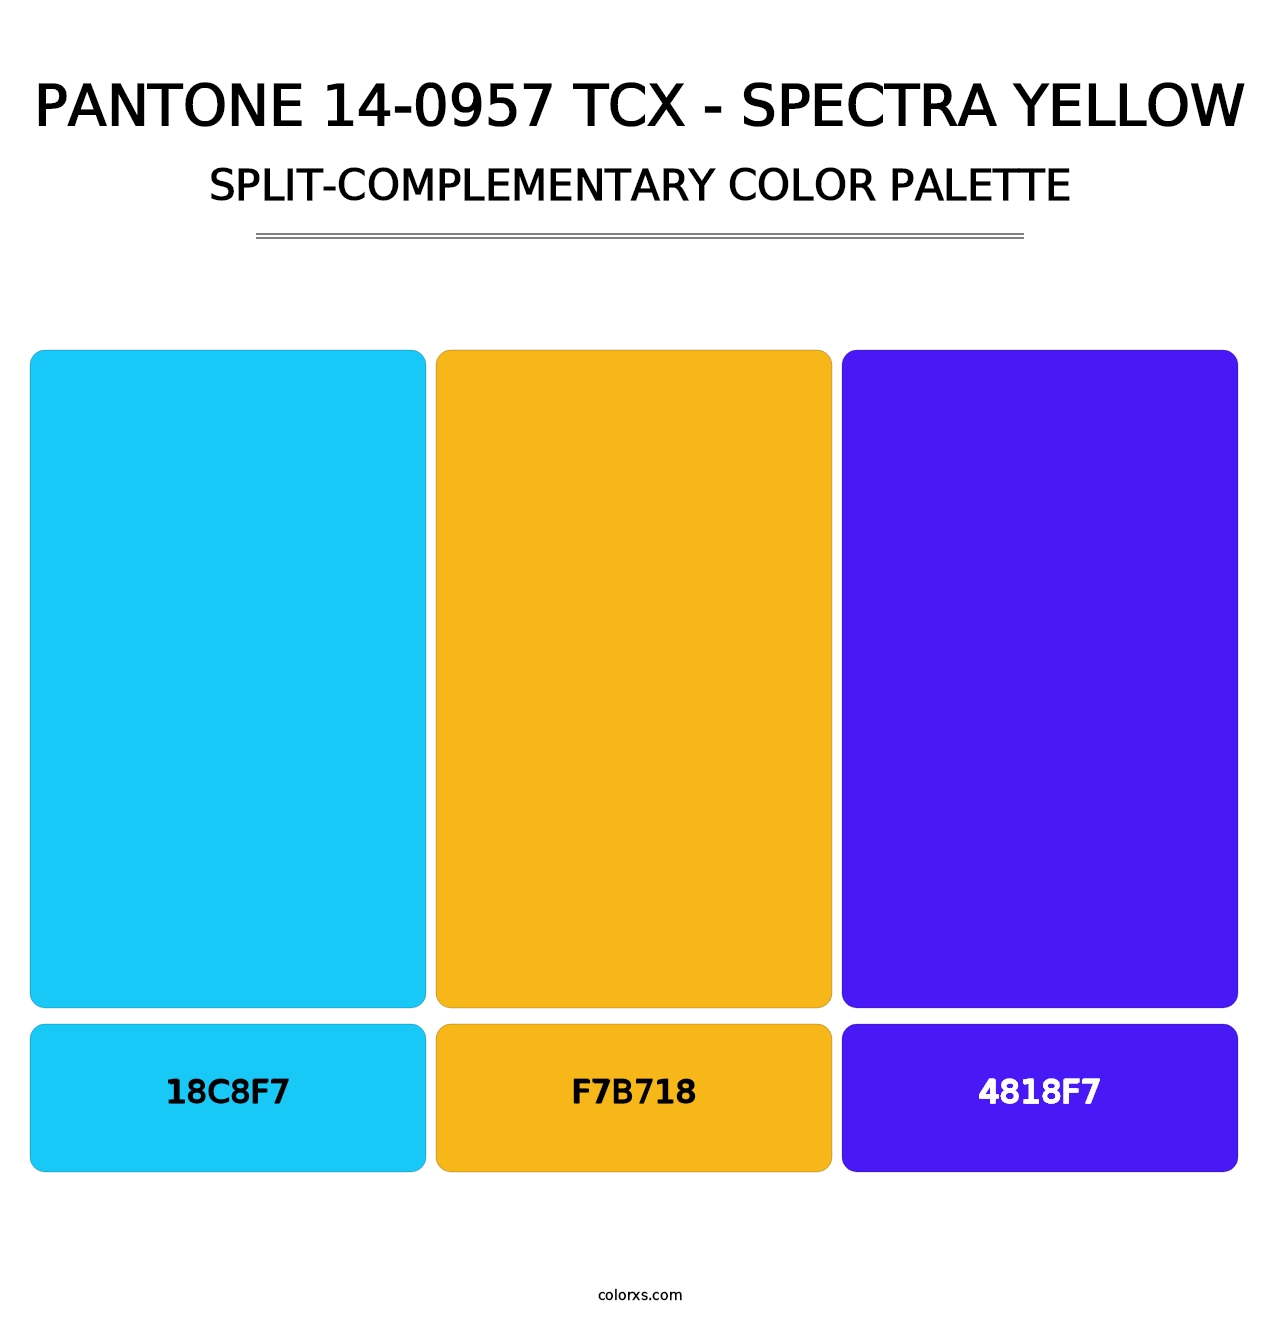 PANTONE 14-0957 TCX - Spectra Yellow - Split-Complementary Color Palette